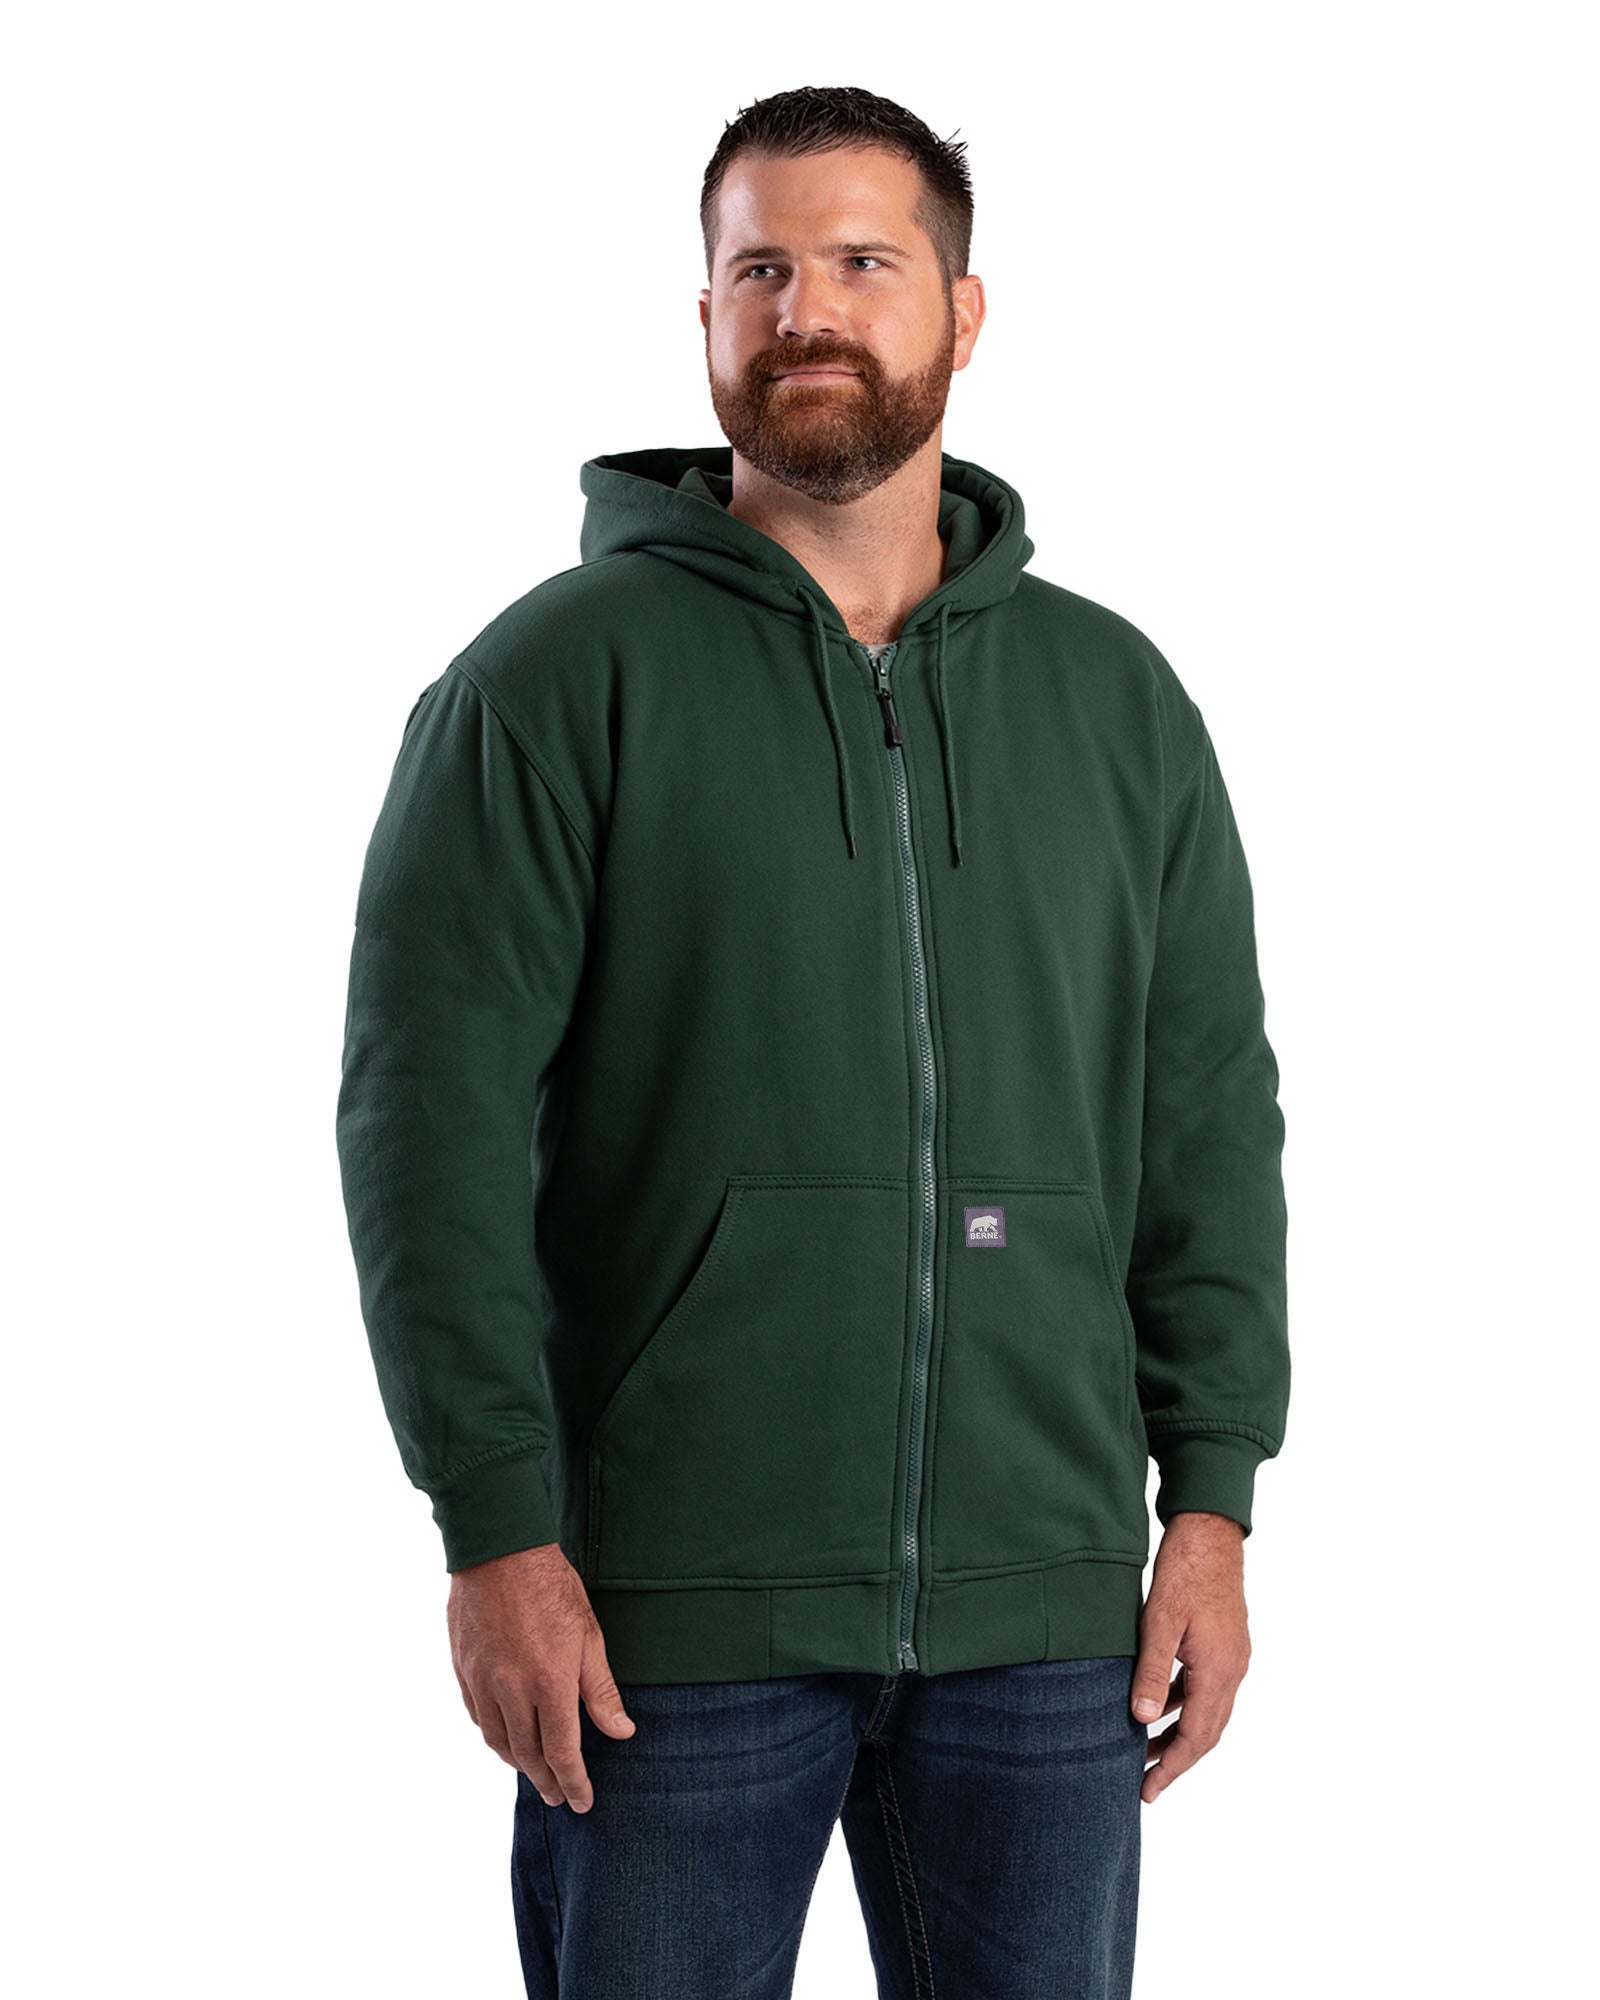 Realtree Edge Sweatshirt Mens Size 3XL Brown Camo Quarter Zip